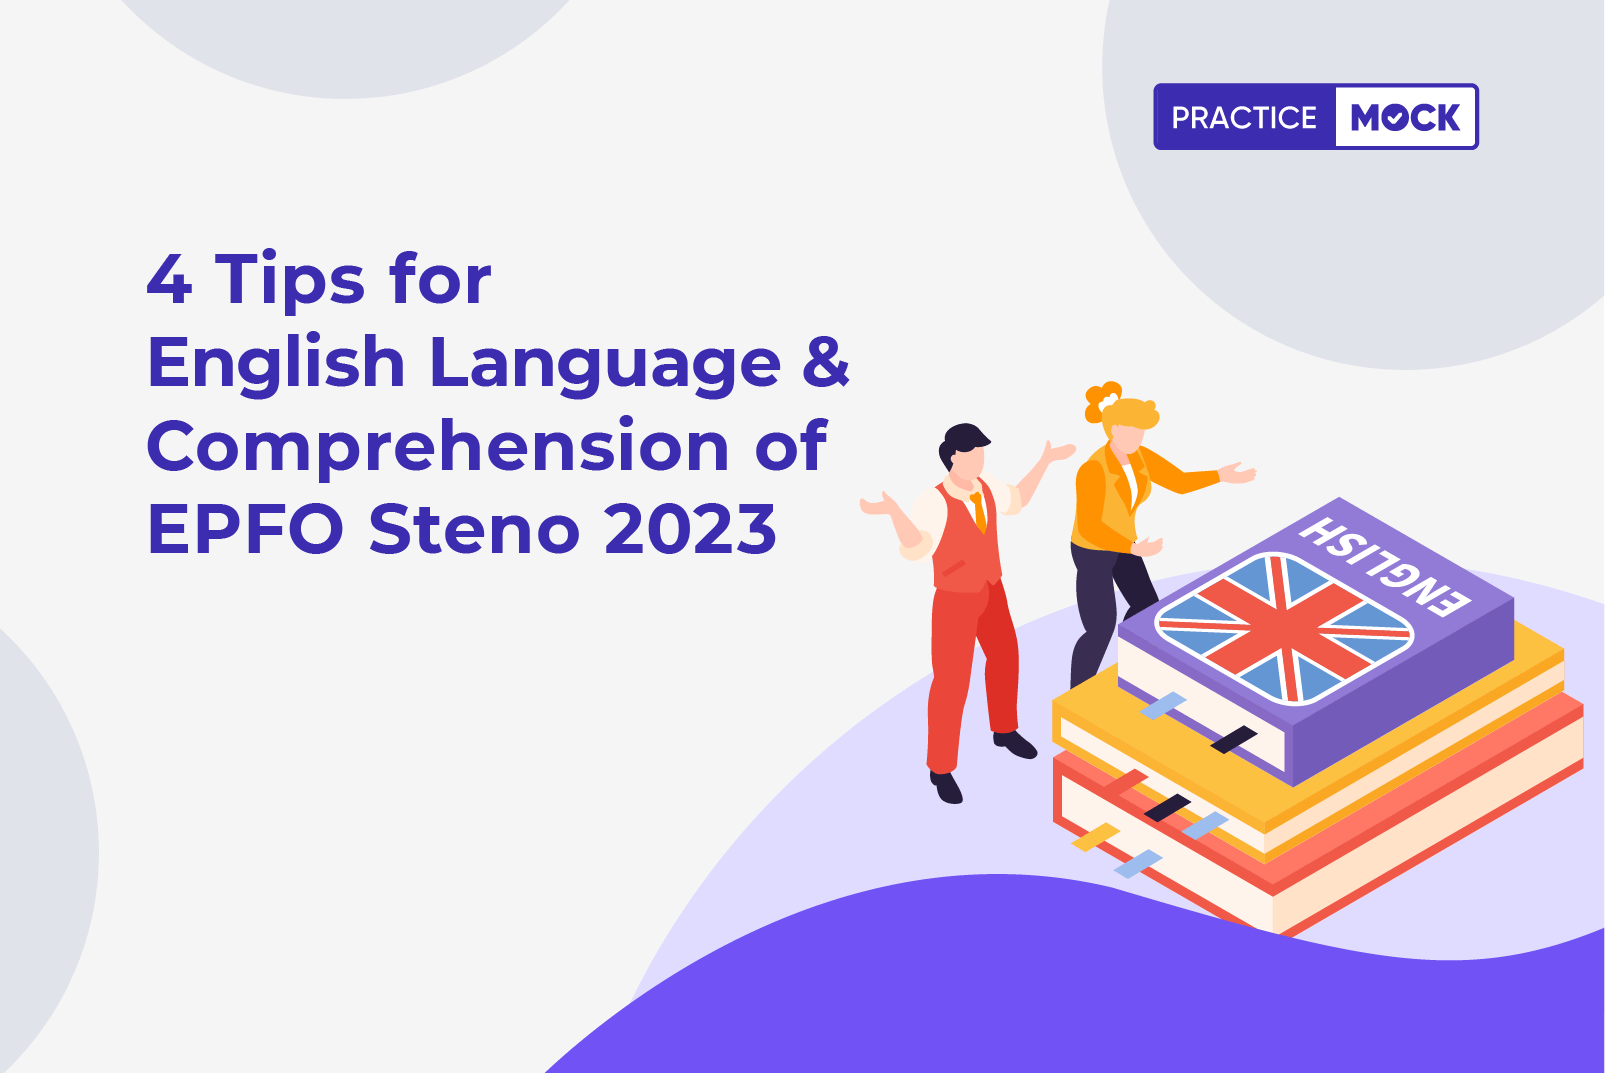 4 Tips for English Language & Comprehension of EPFO Steno